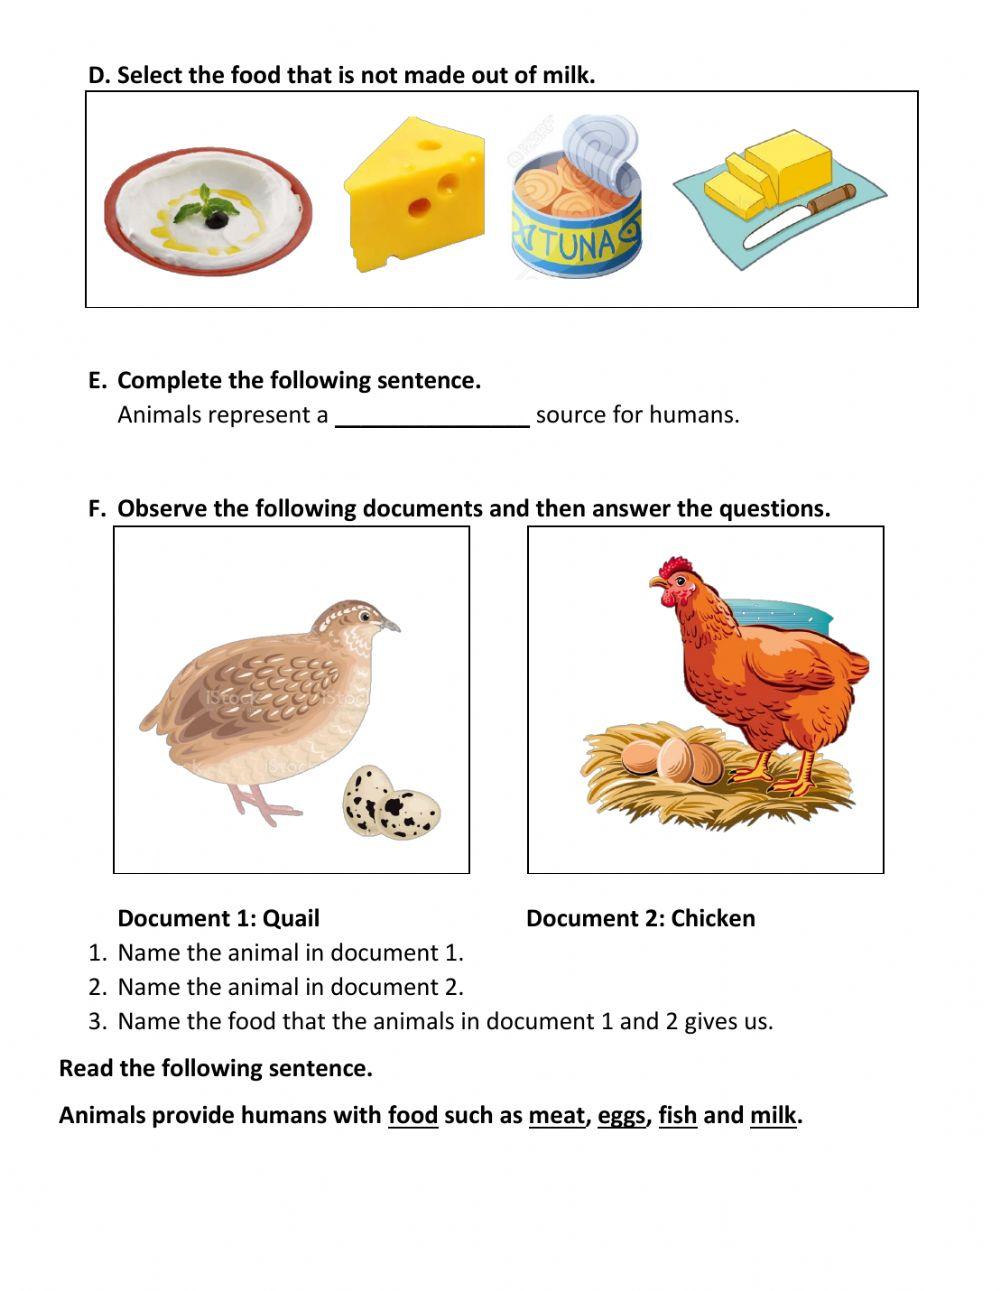 Benefits of animals: food source